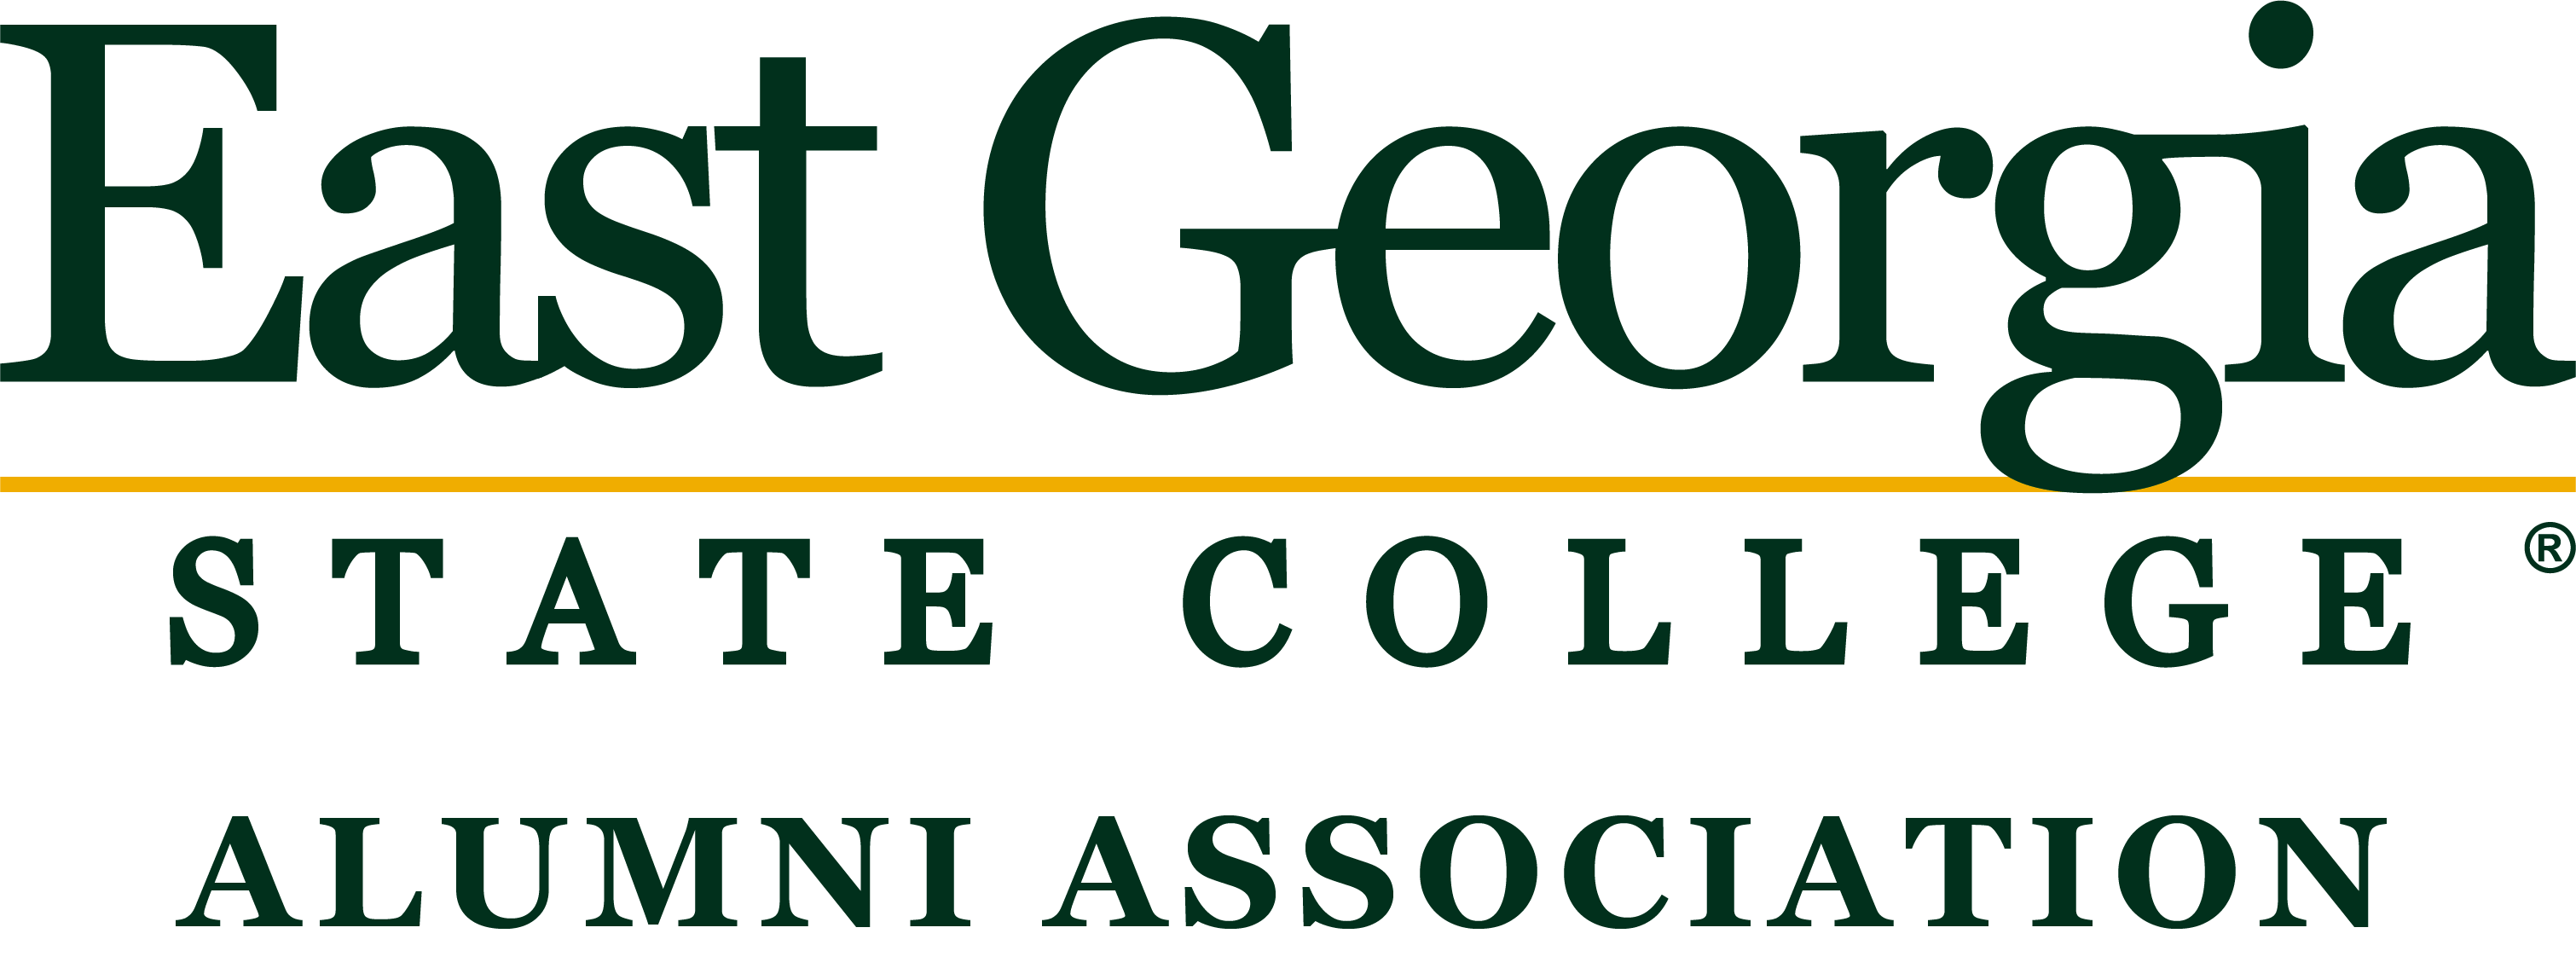 EGSC Alumni Association